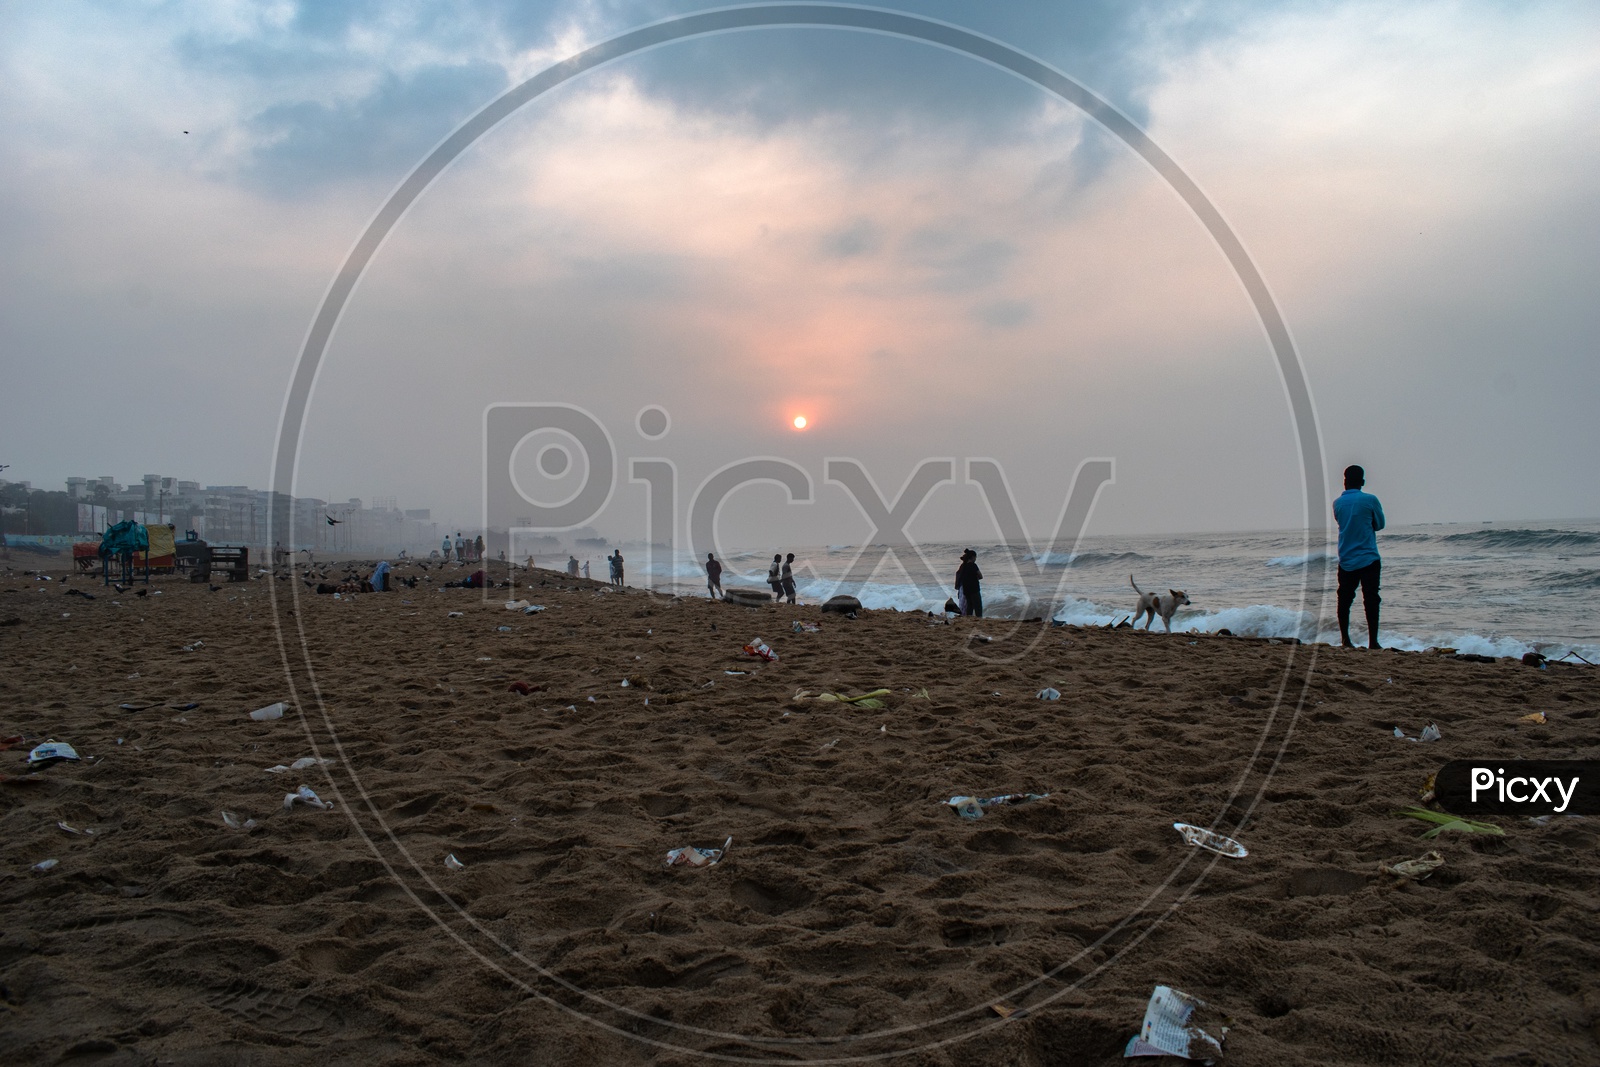 People/Group of people enjoying the sunrise view at Rama Krishna beach (R.K.Beach), Vishakapatnam/Vizag.